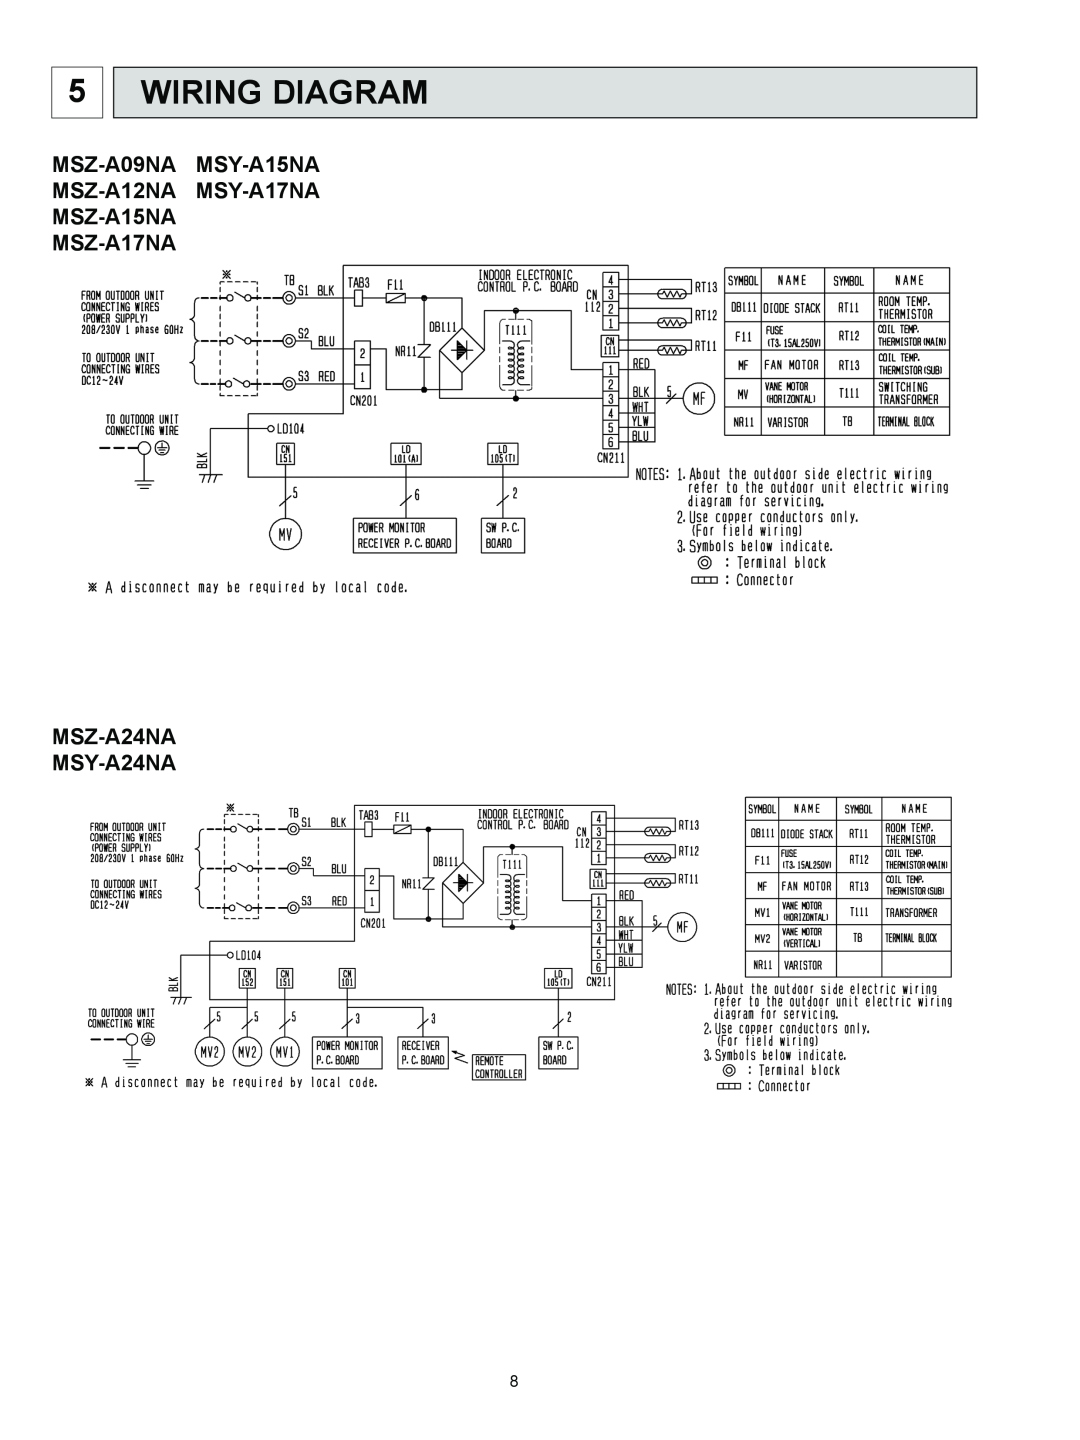 Logitech OB450 REVISED EDITION-B service manual Wiring Diagram, MSZ-A09NA MSY-A15NA MSZ-A12NA MSY-A17NA MSZ-A15NA 